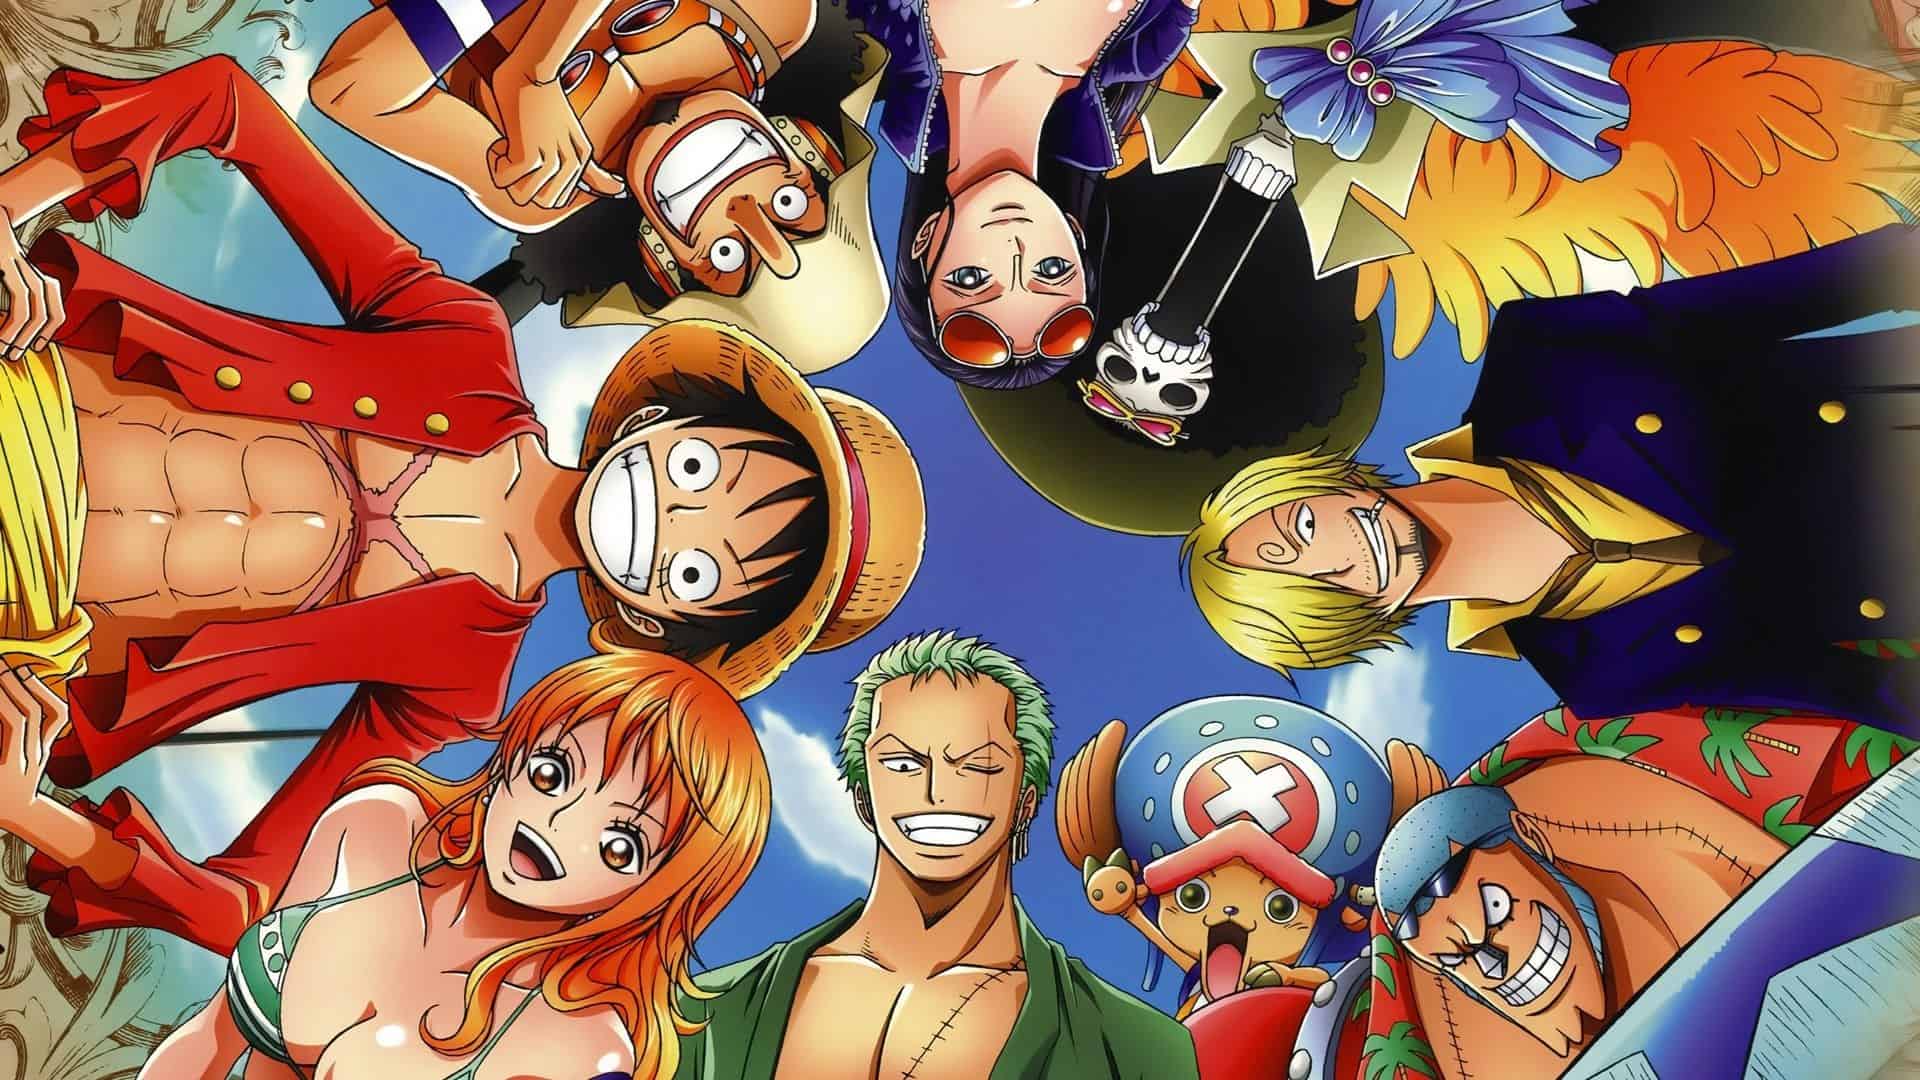 Hình One Piece chất lượng cao